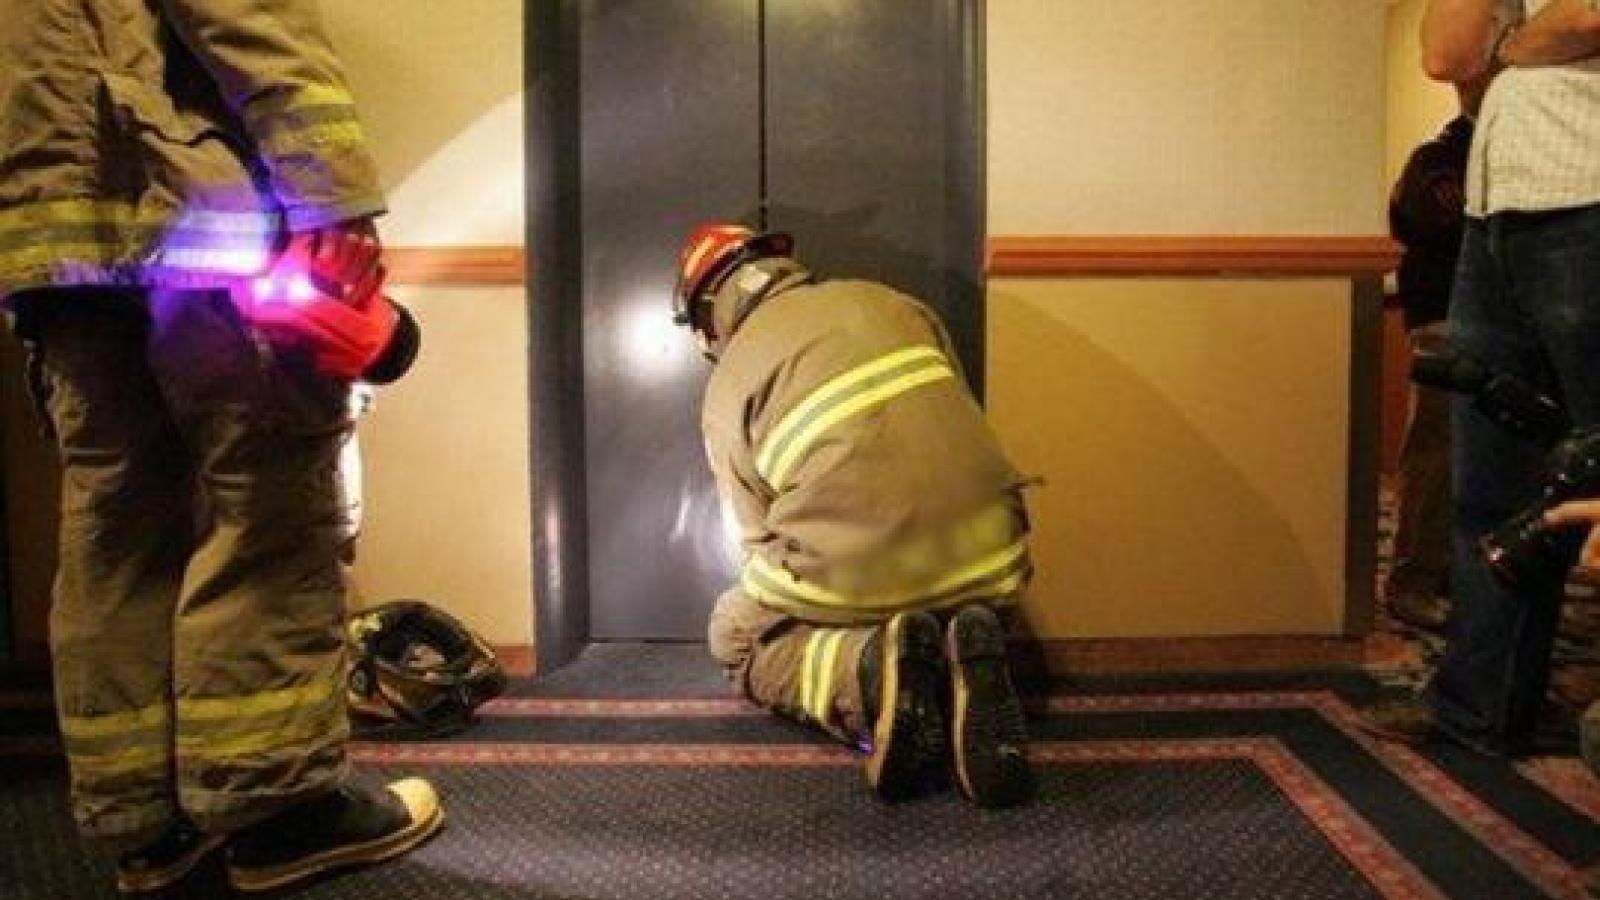 Сотрудники прокуратуры проверяли лифт — и застряли